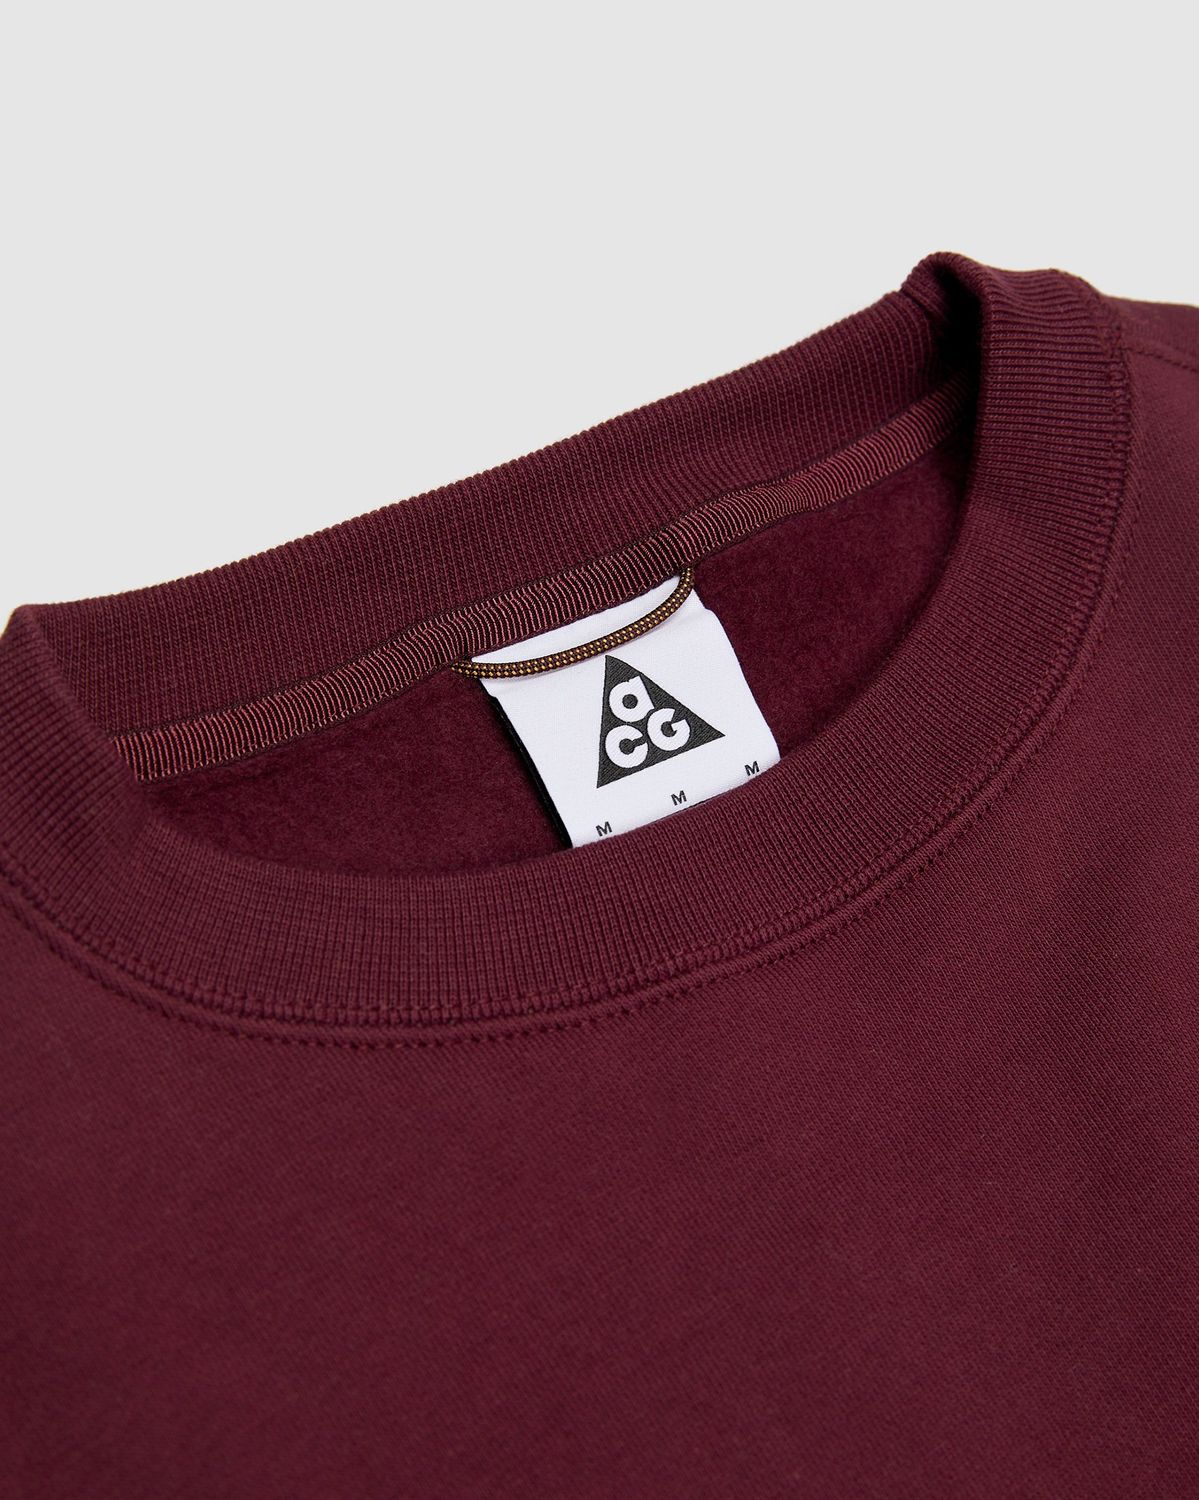 Nike ACG – Allover Print Crew Sweater Burgundy - Sweatshirts - Red - Image 3